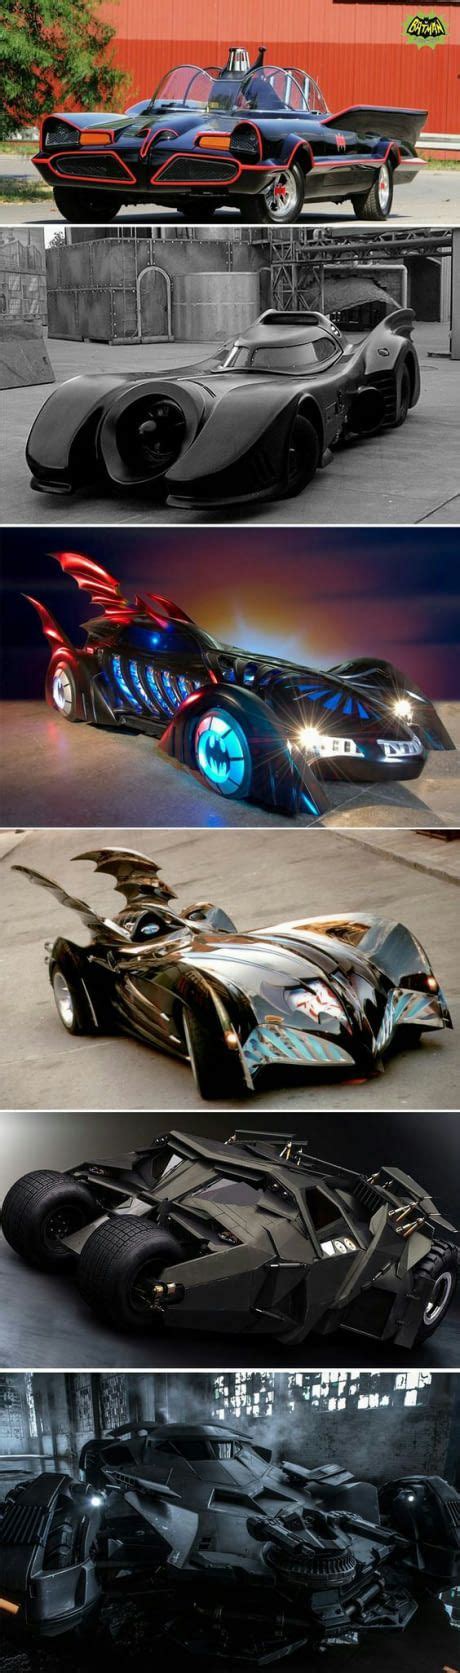 Evolution Of The Batmobile Batmobile Batman Cars Movie